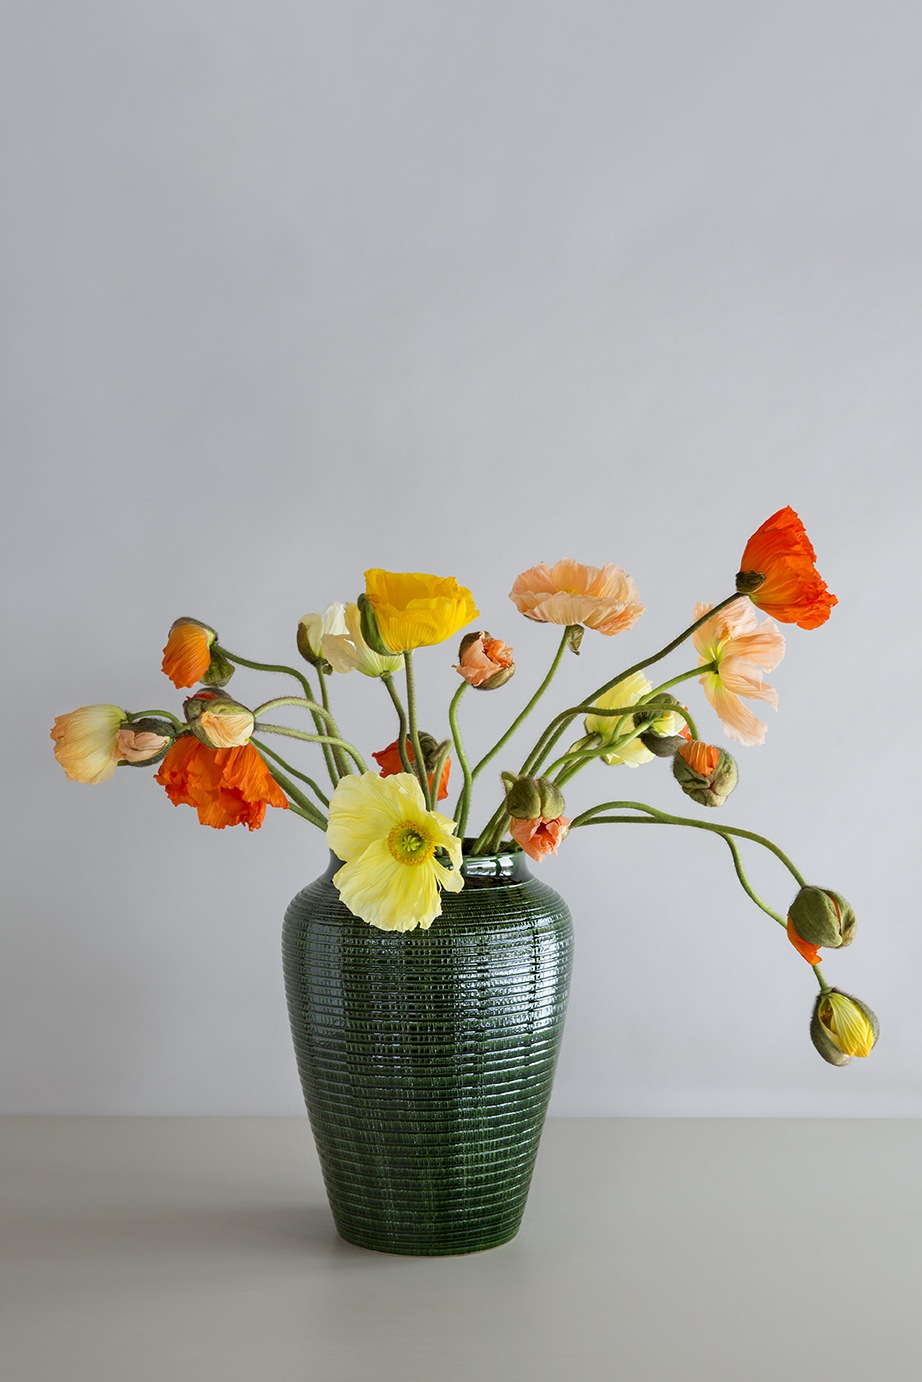 Green glazed vase with yellow and orange flowers